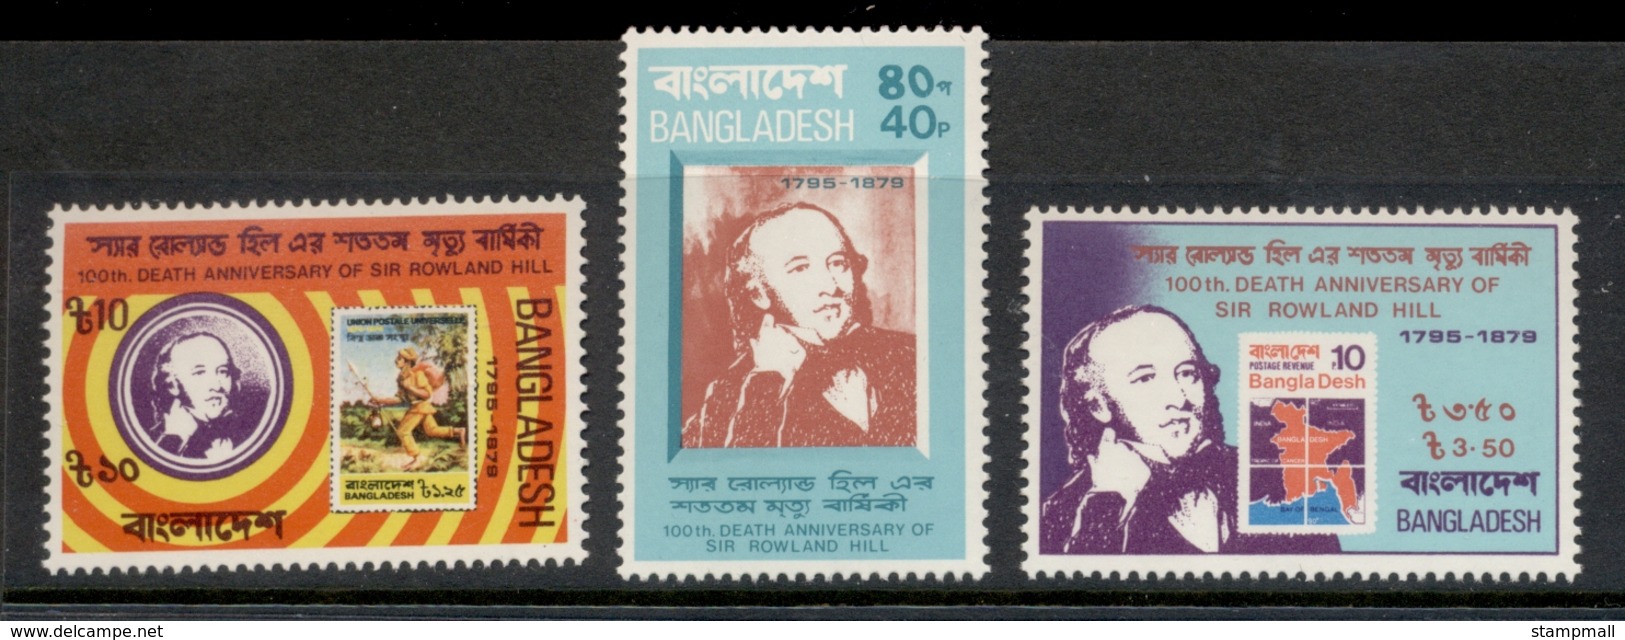 Bangladesh 1979 Sir Rowland Hill Death Centenary MUH - Bangladesh